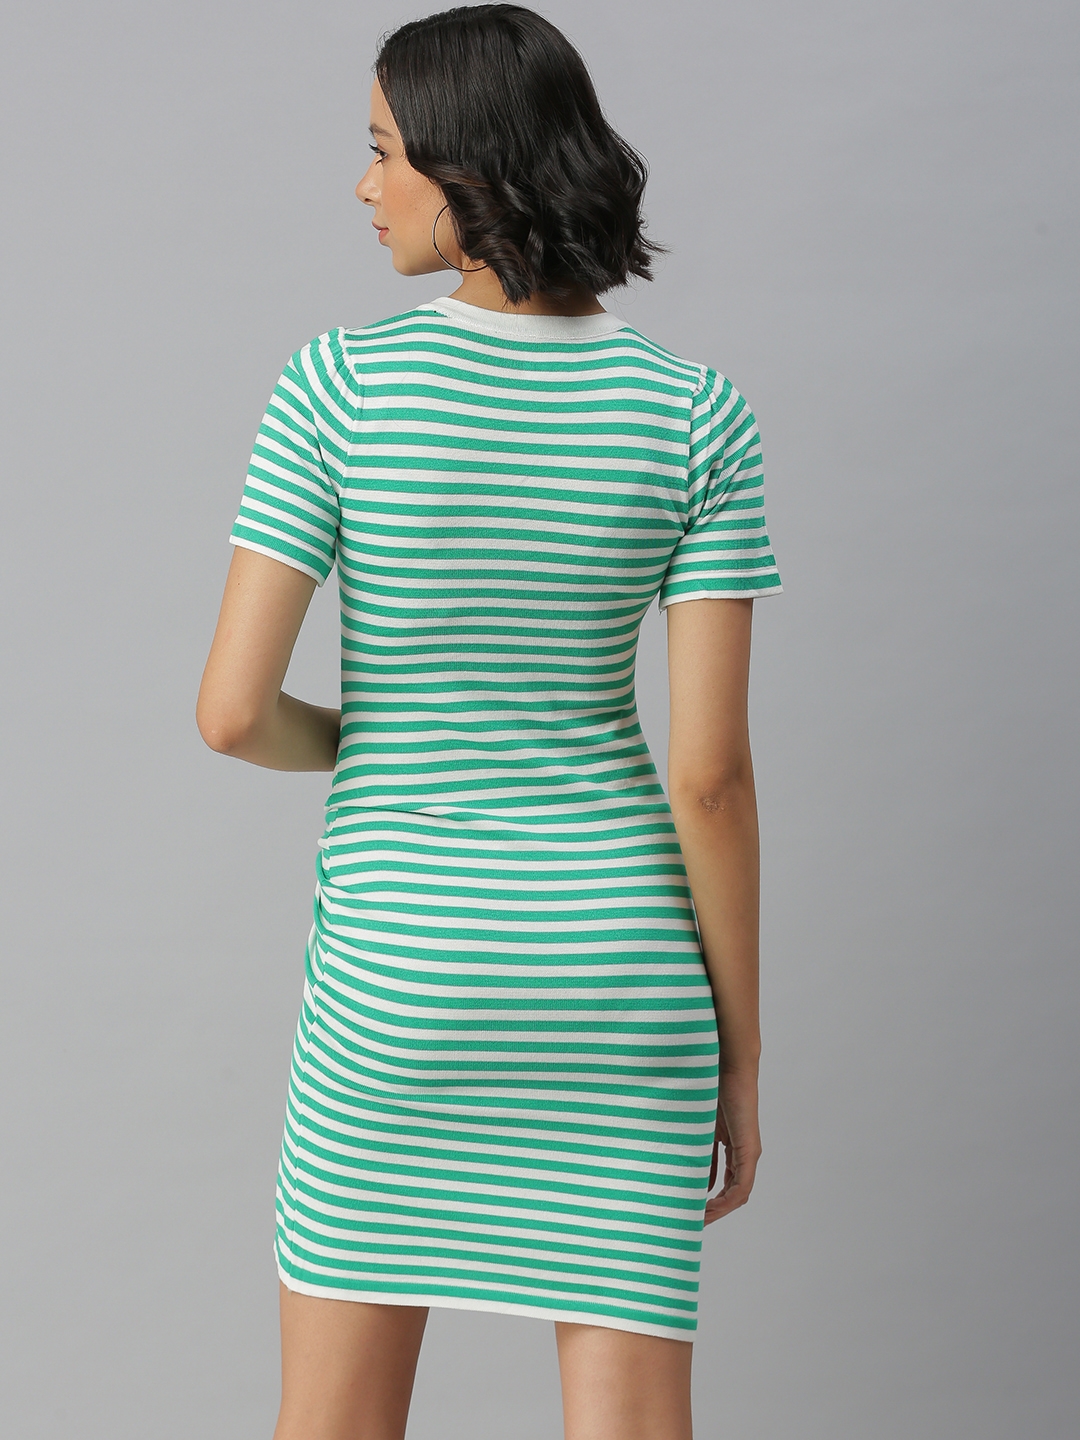 Women's Green Cotton Striped Dresses